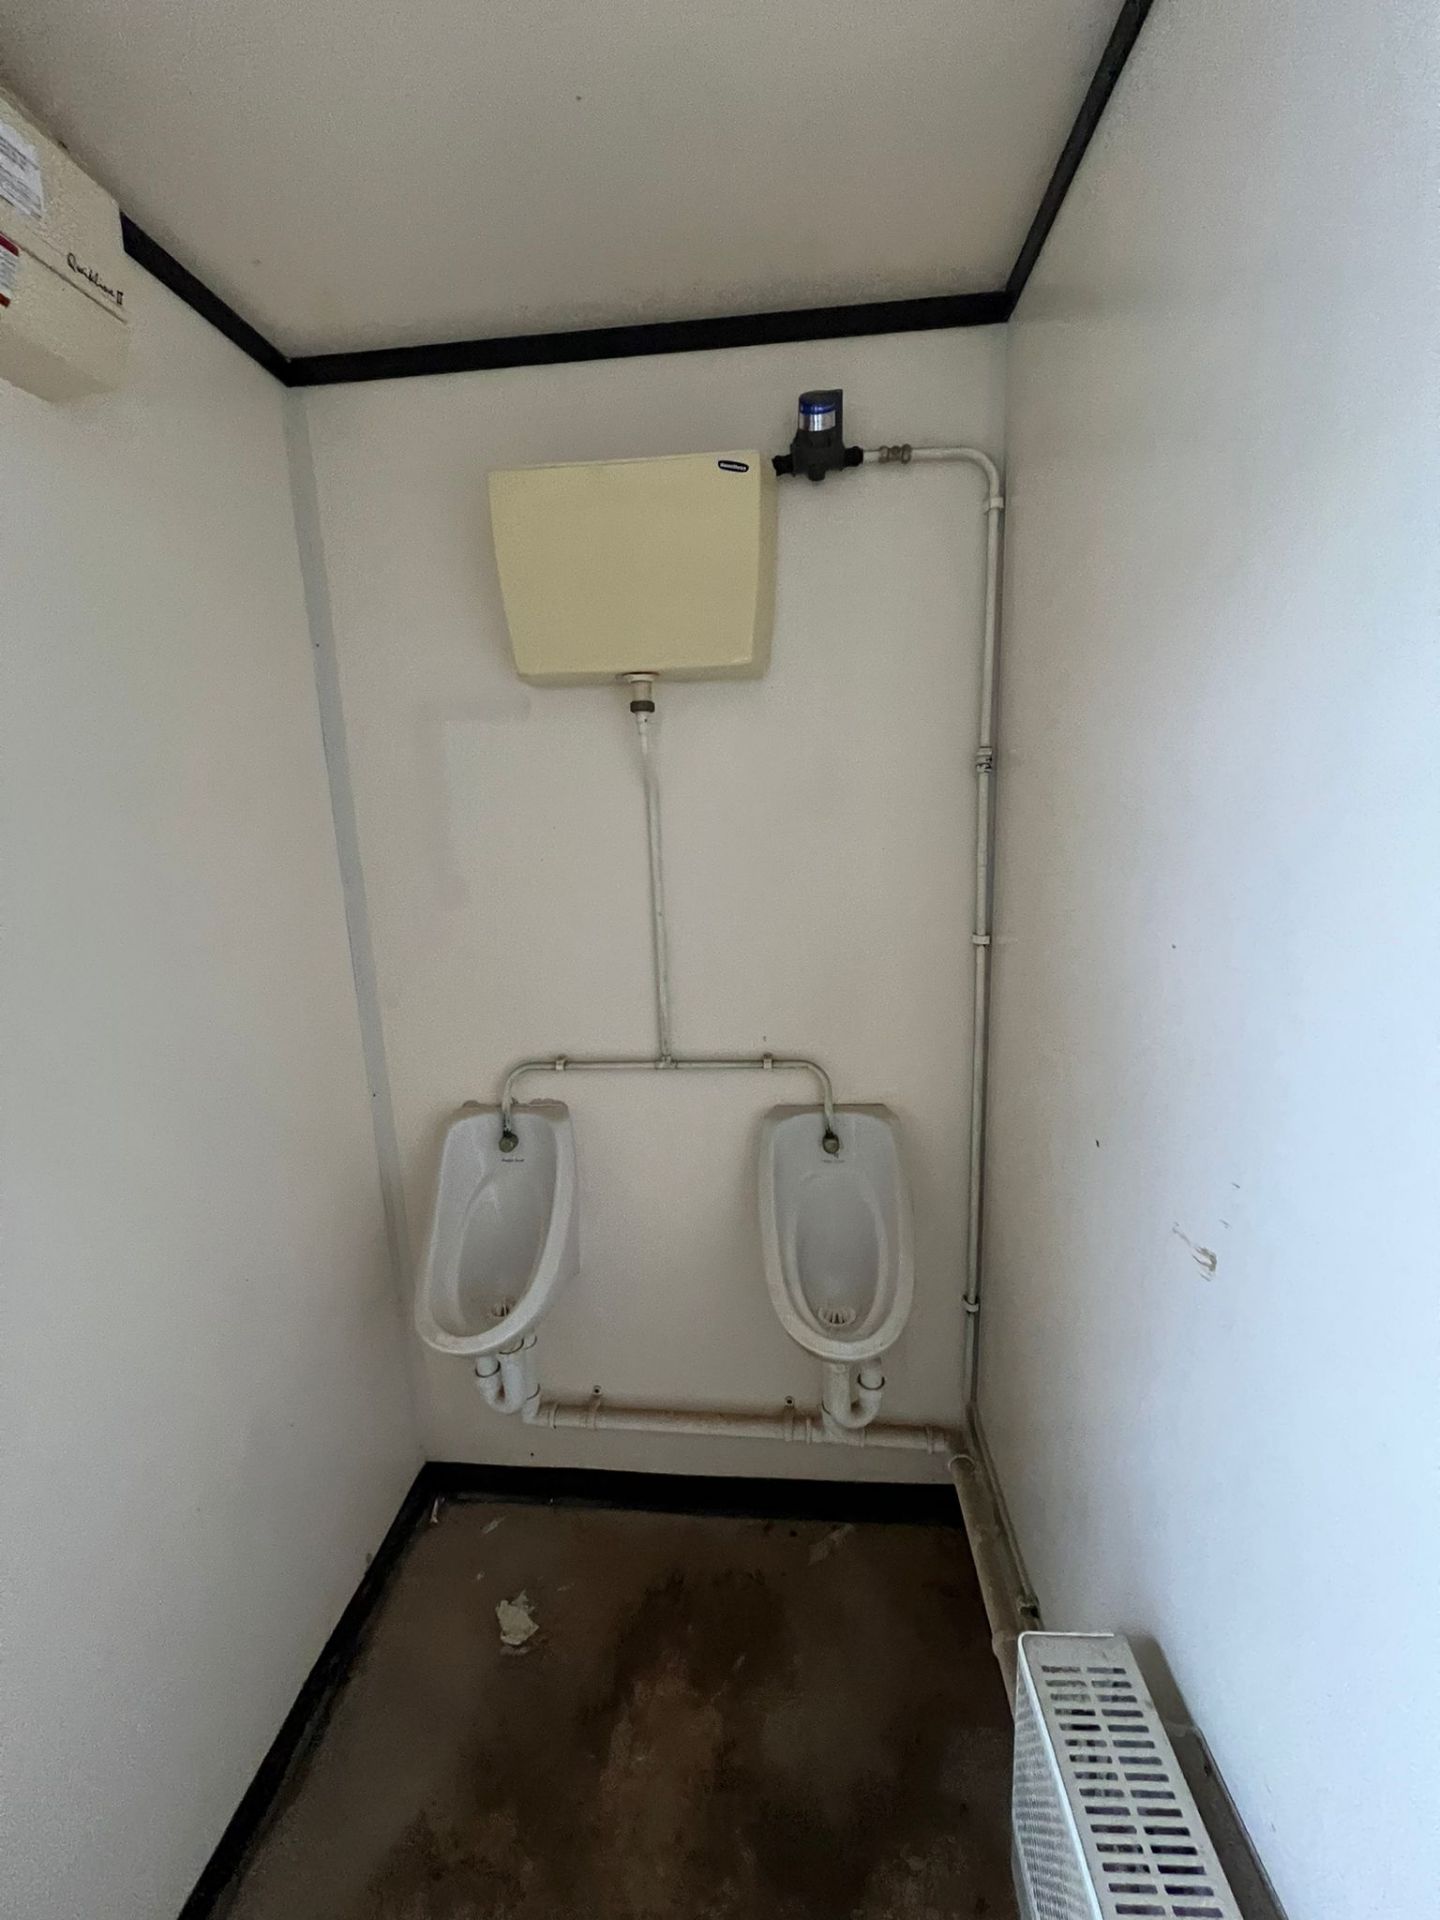 2 + 1 male female toilet block - Image 4 of 11